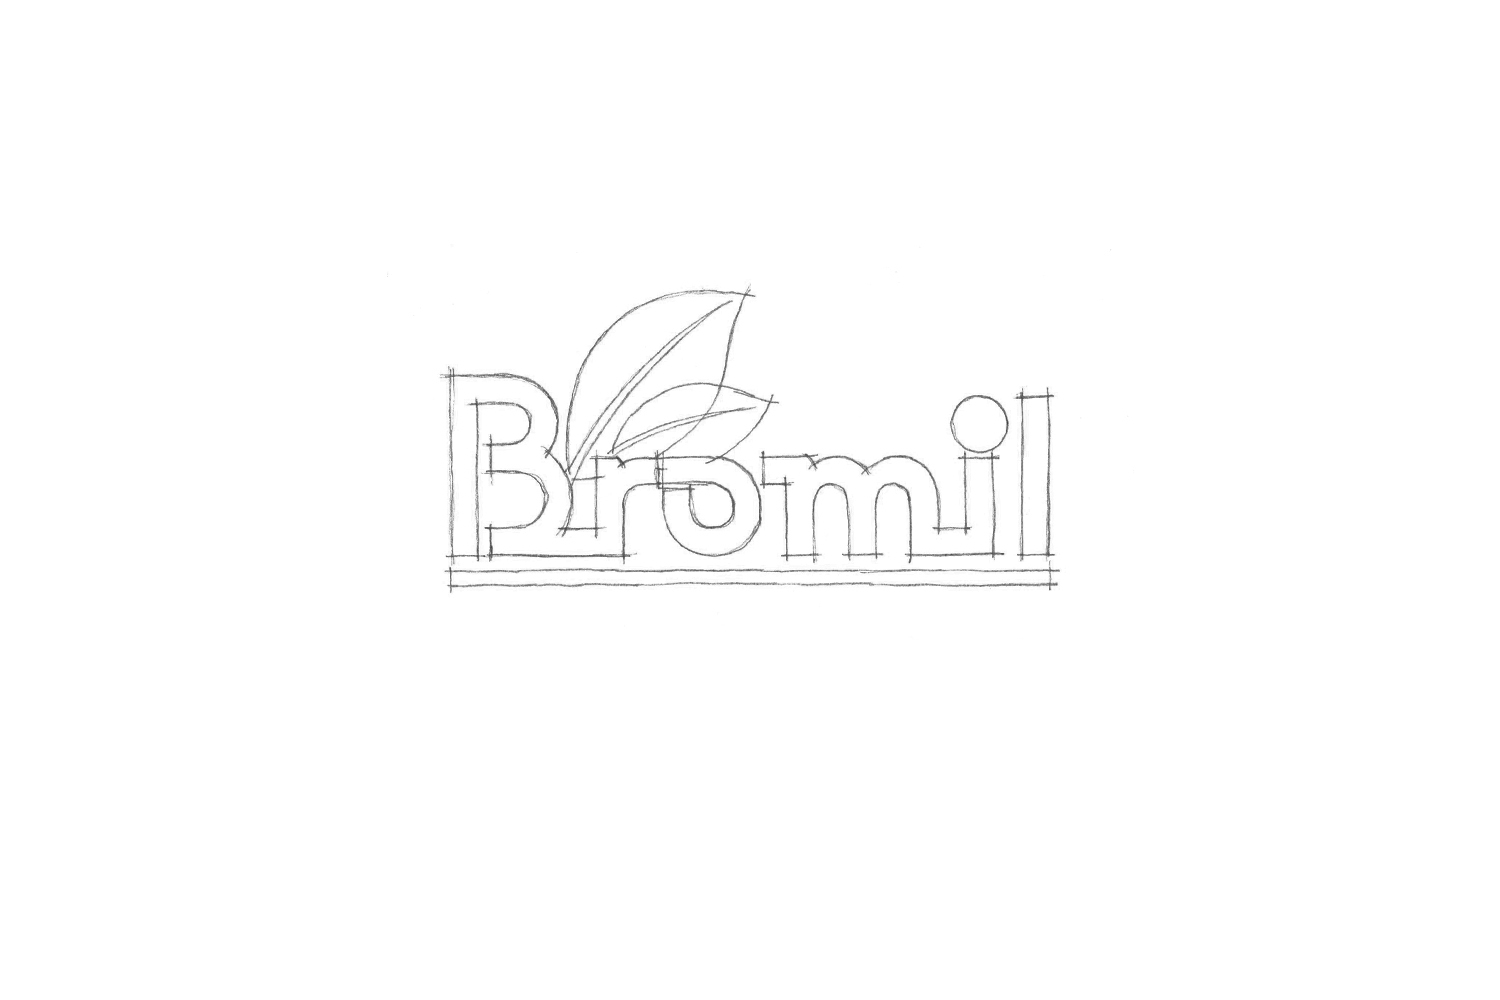 Bromil logo pencil sketch